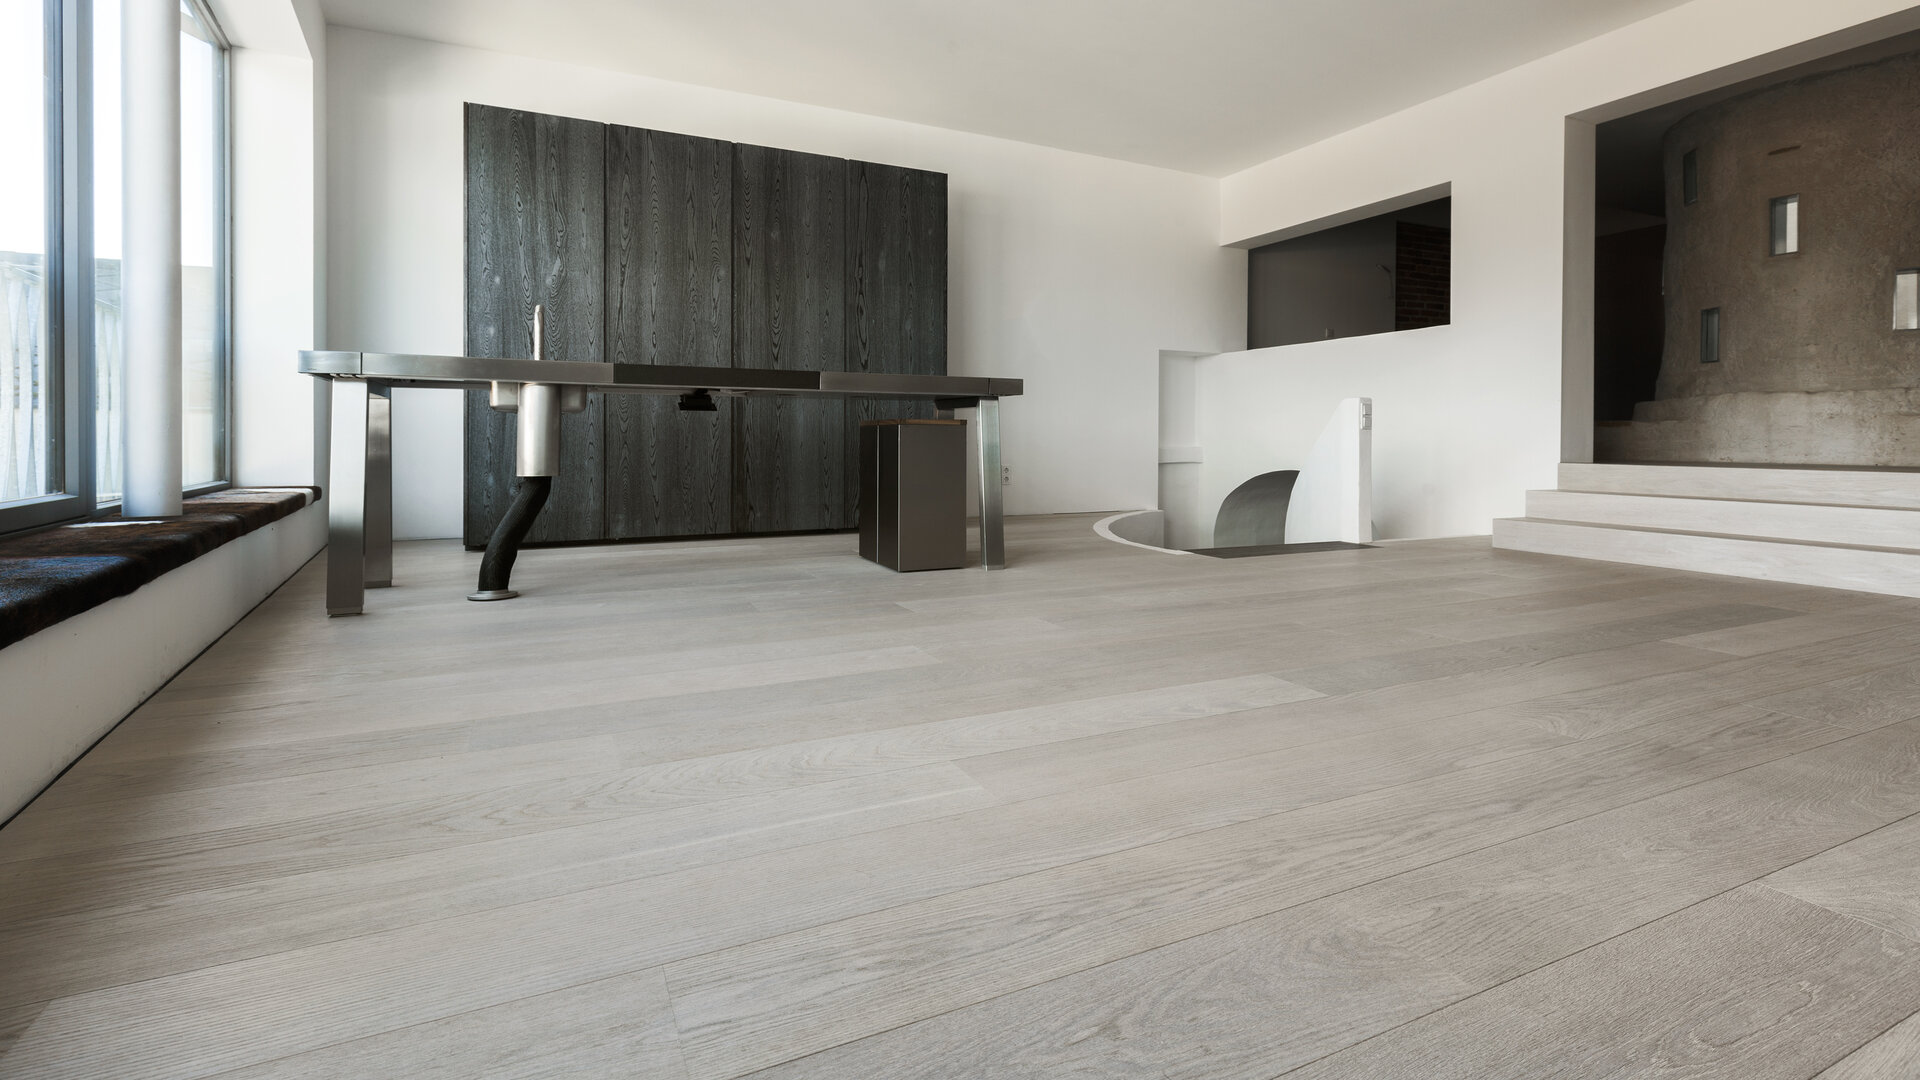 TRAPA Plank floor 
Oak calm brushed Carrara